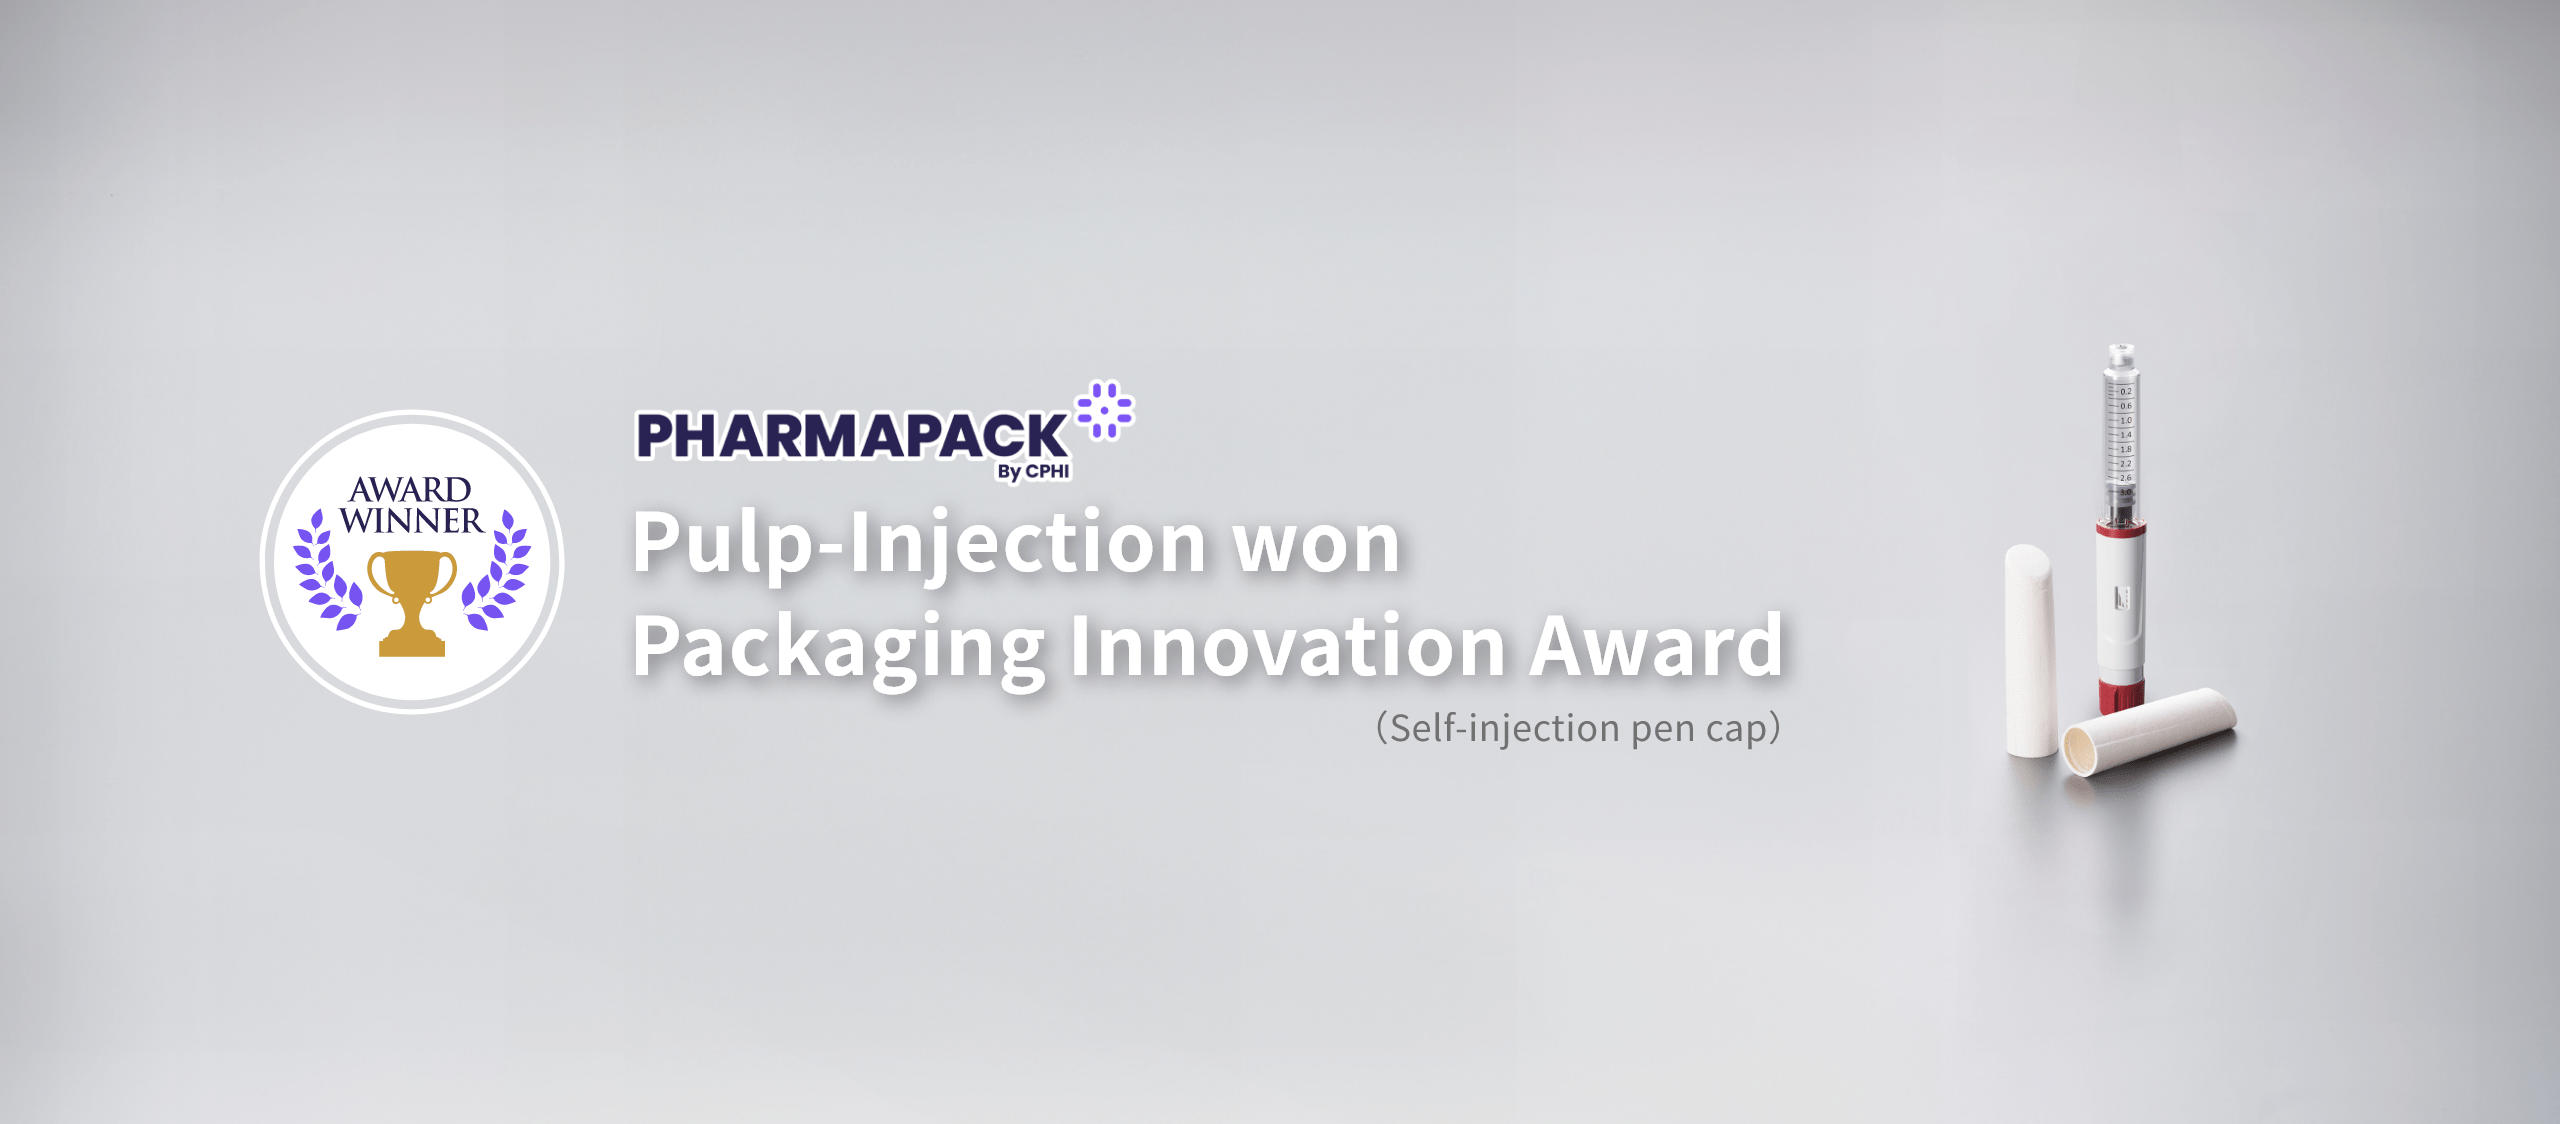 Pharmapac Pulp-Injection Packing Innovation Award